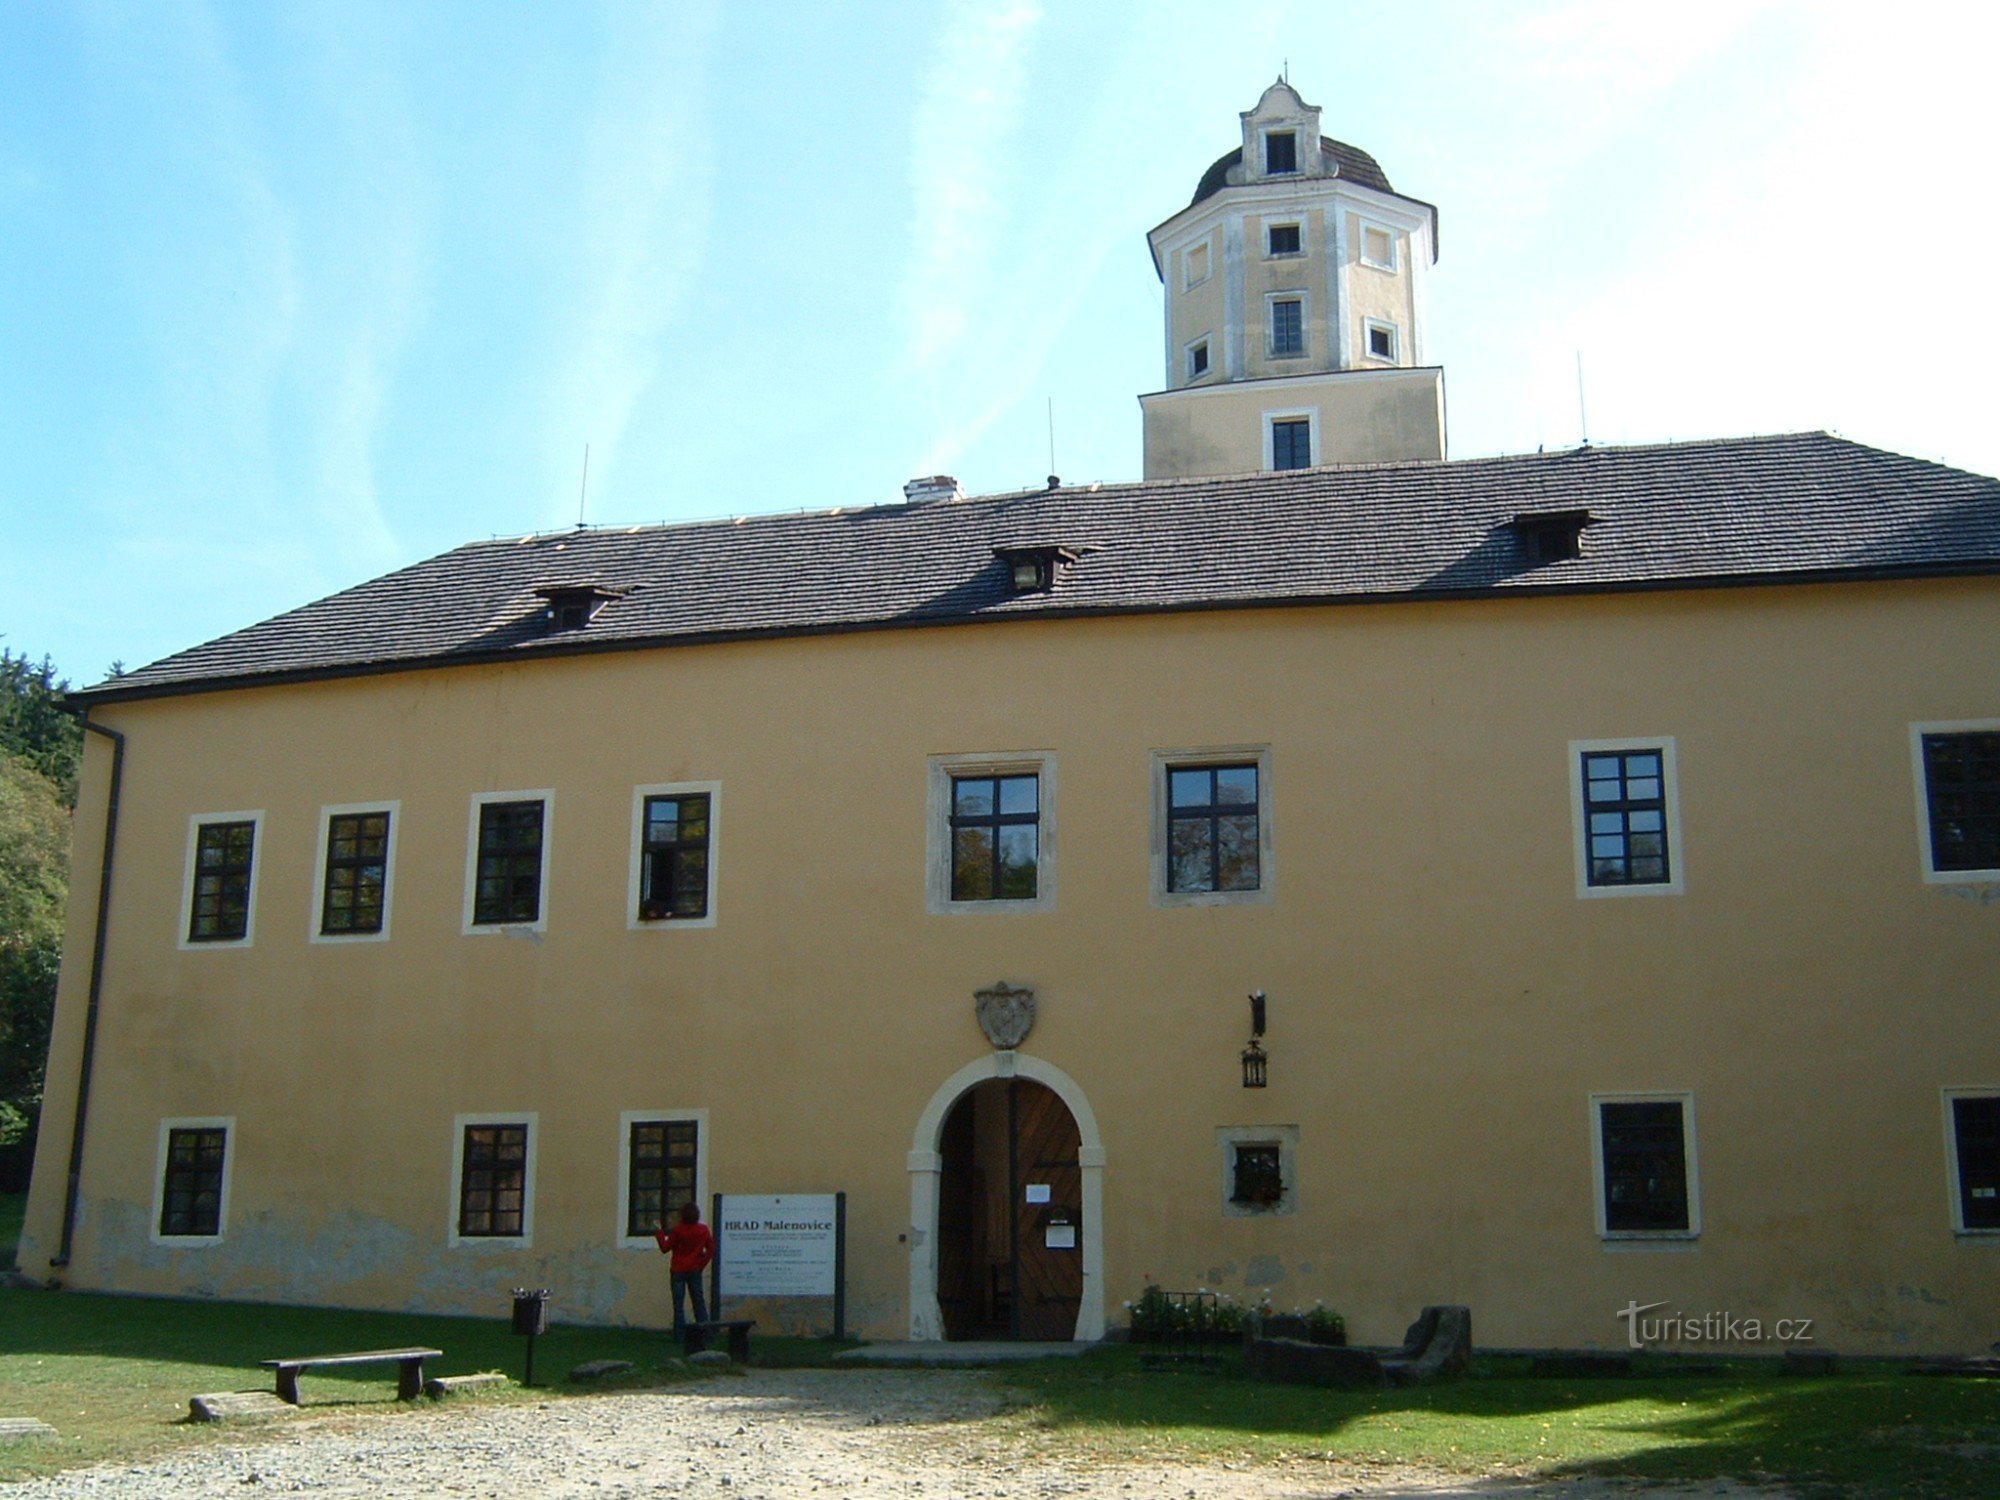 Malenovice Castle